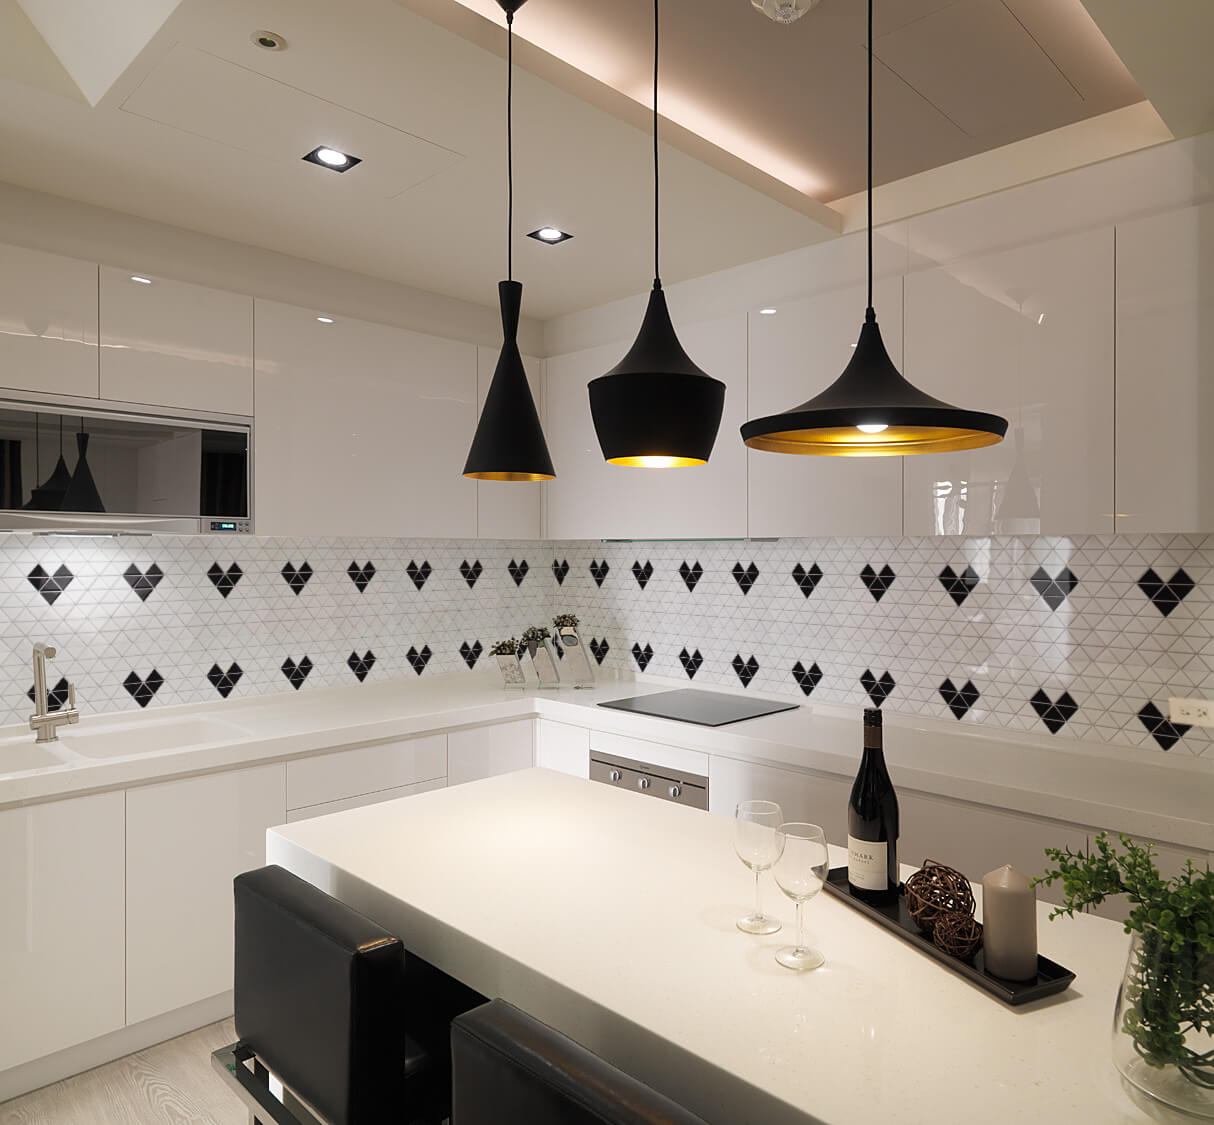 TR2-SH-GW-B_single heart pattern glossy triangle tile mosaic for kitchen backsplash